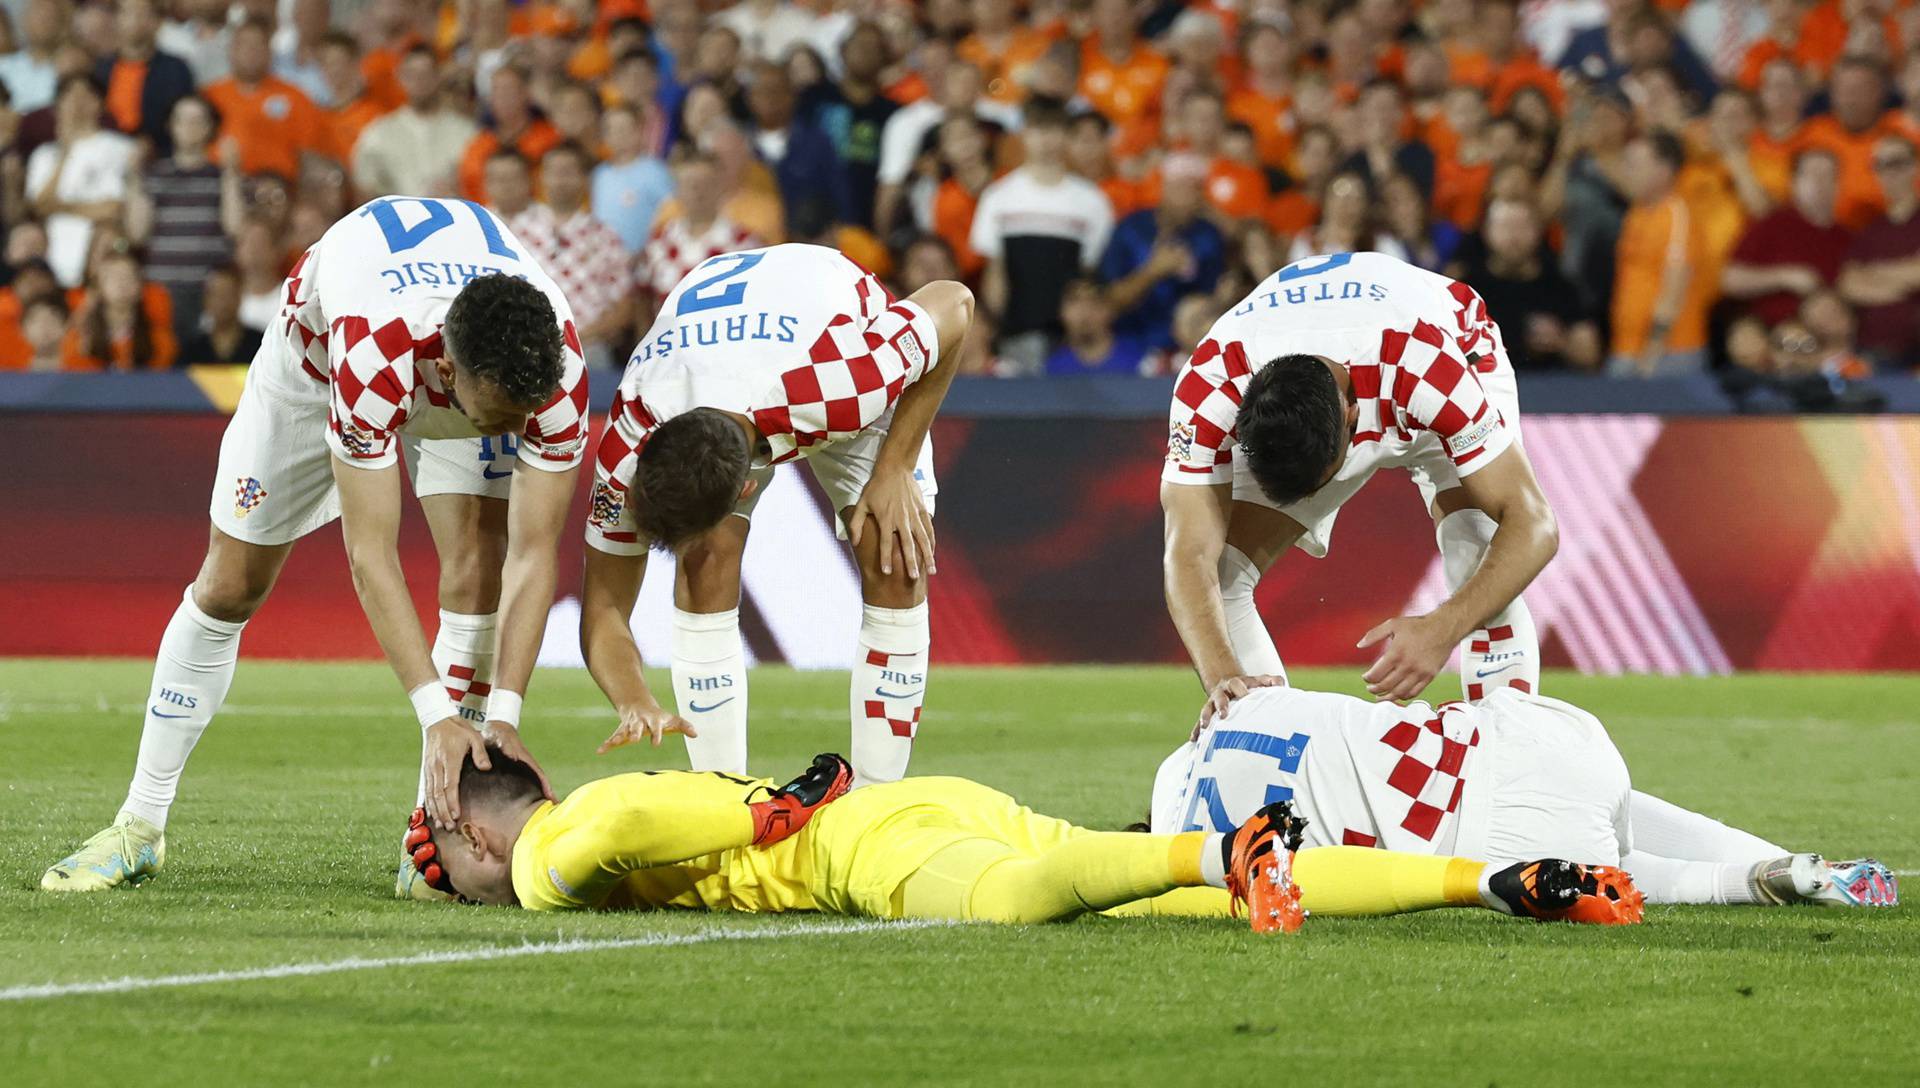 UEFA Nations League - Semi Final - Netherlands v Croatia